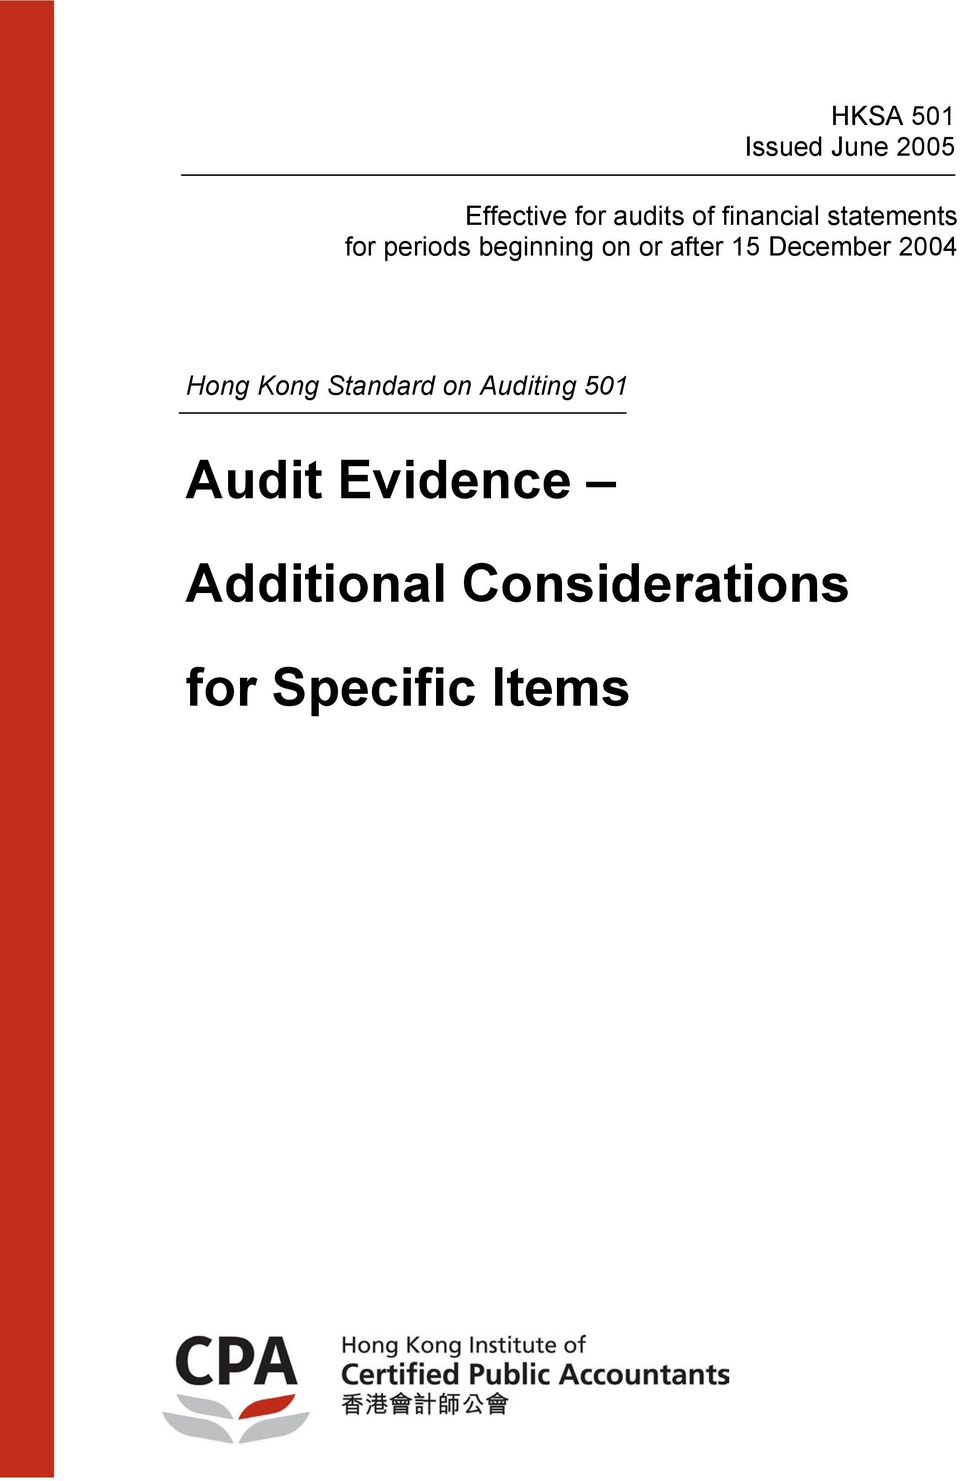 December 2004 Hong Kong Standard on Auditing 501